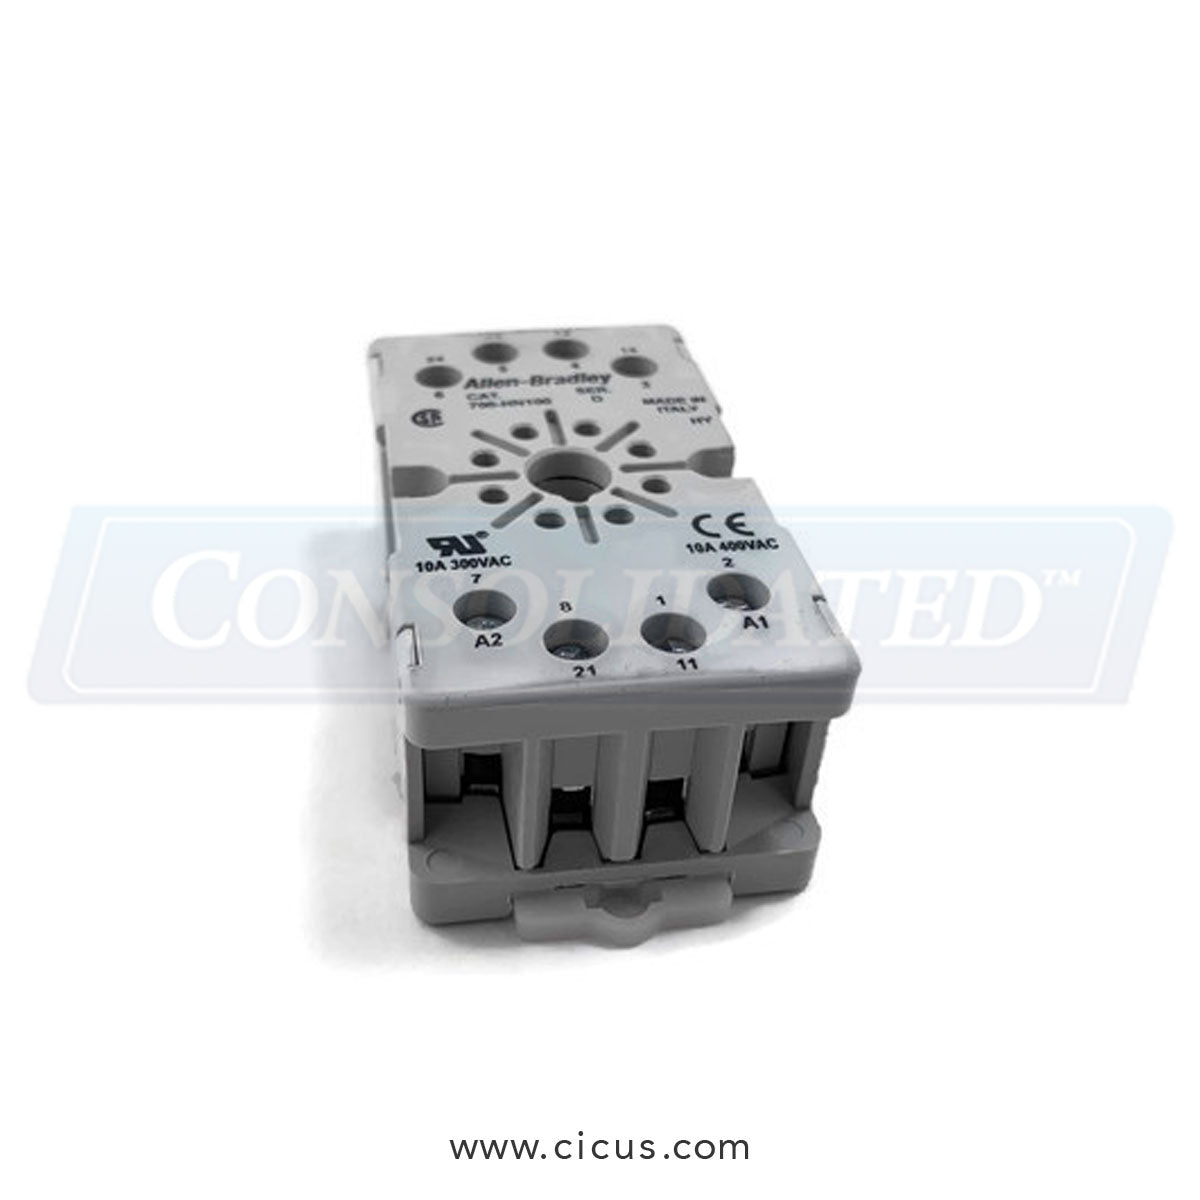 GA Braun Socket Relay - 8 Pin Octal Din / Surface Mount [E03500001]